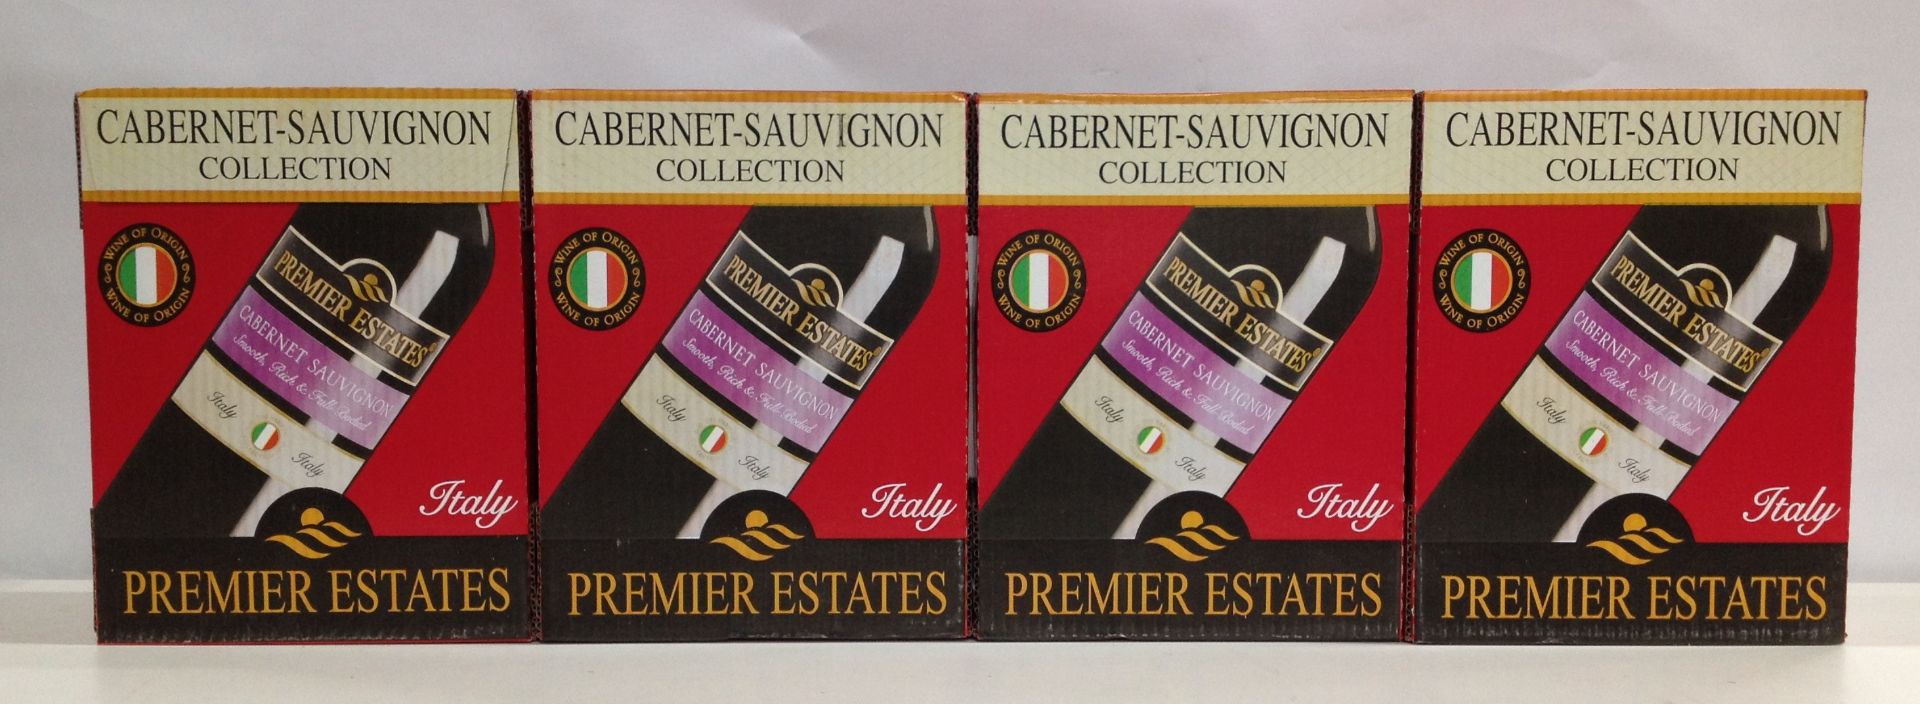 24 x 75cl Bottles Premier Estates Cabernet Sauvignon Premium Red Wine - Image 2 of 4